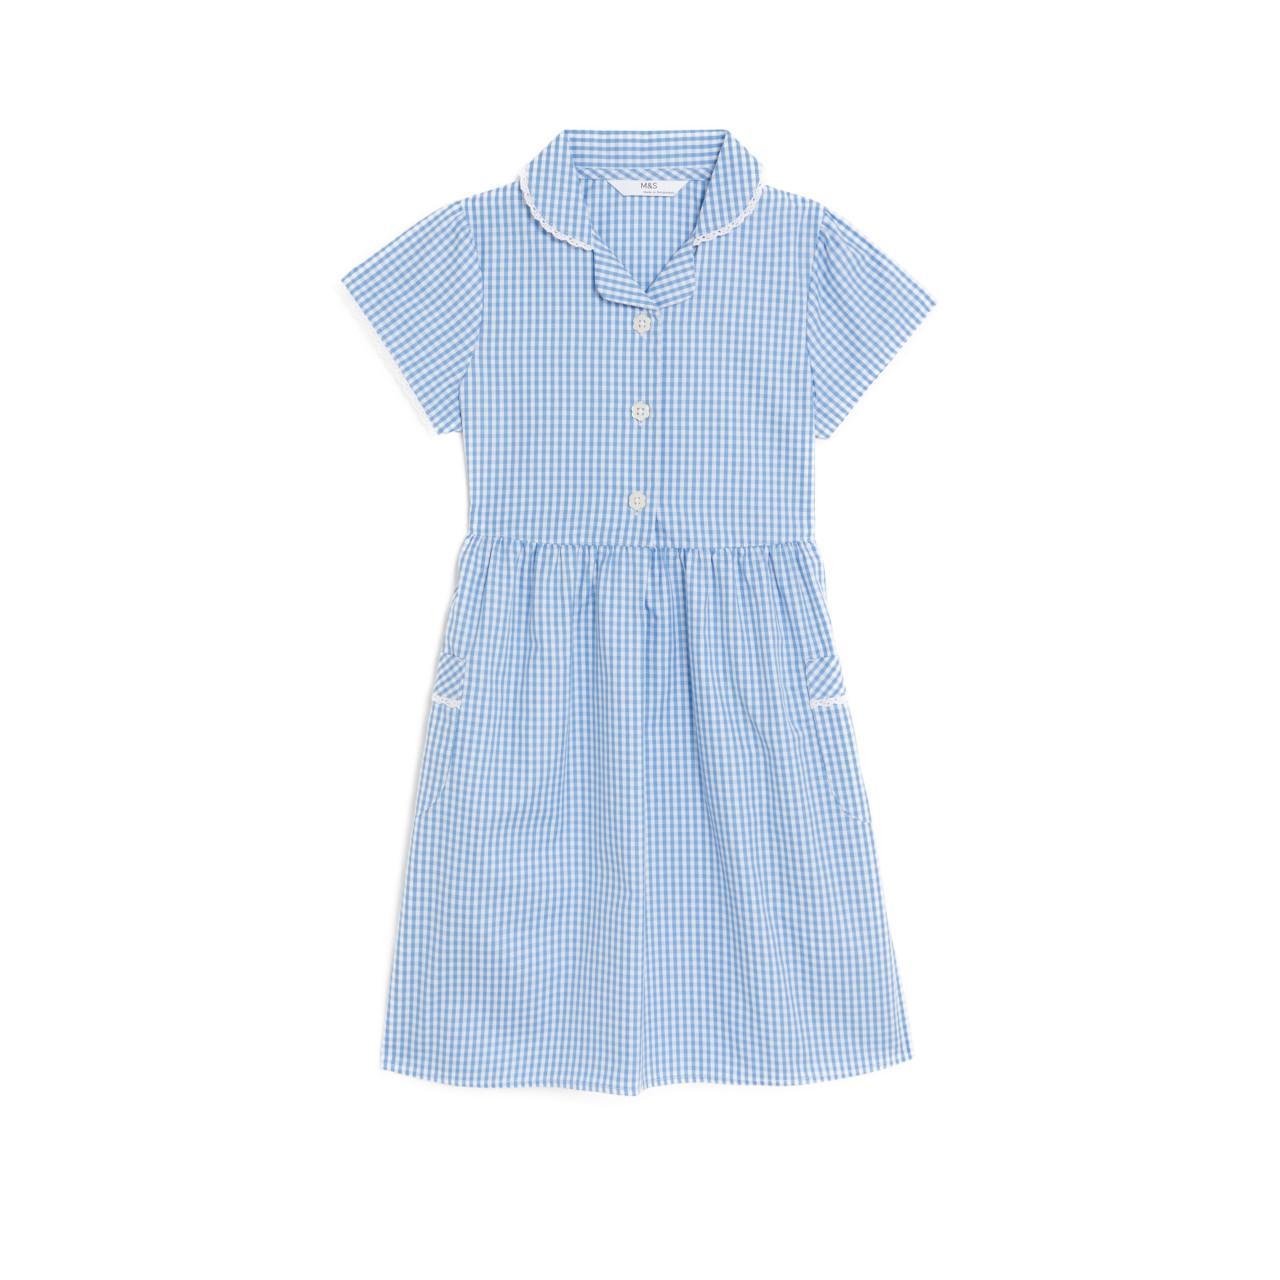 M&S Girls Pure Cotton Gingham School Dress, 5-6 Years, Light Blue